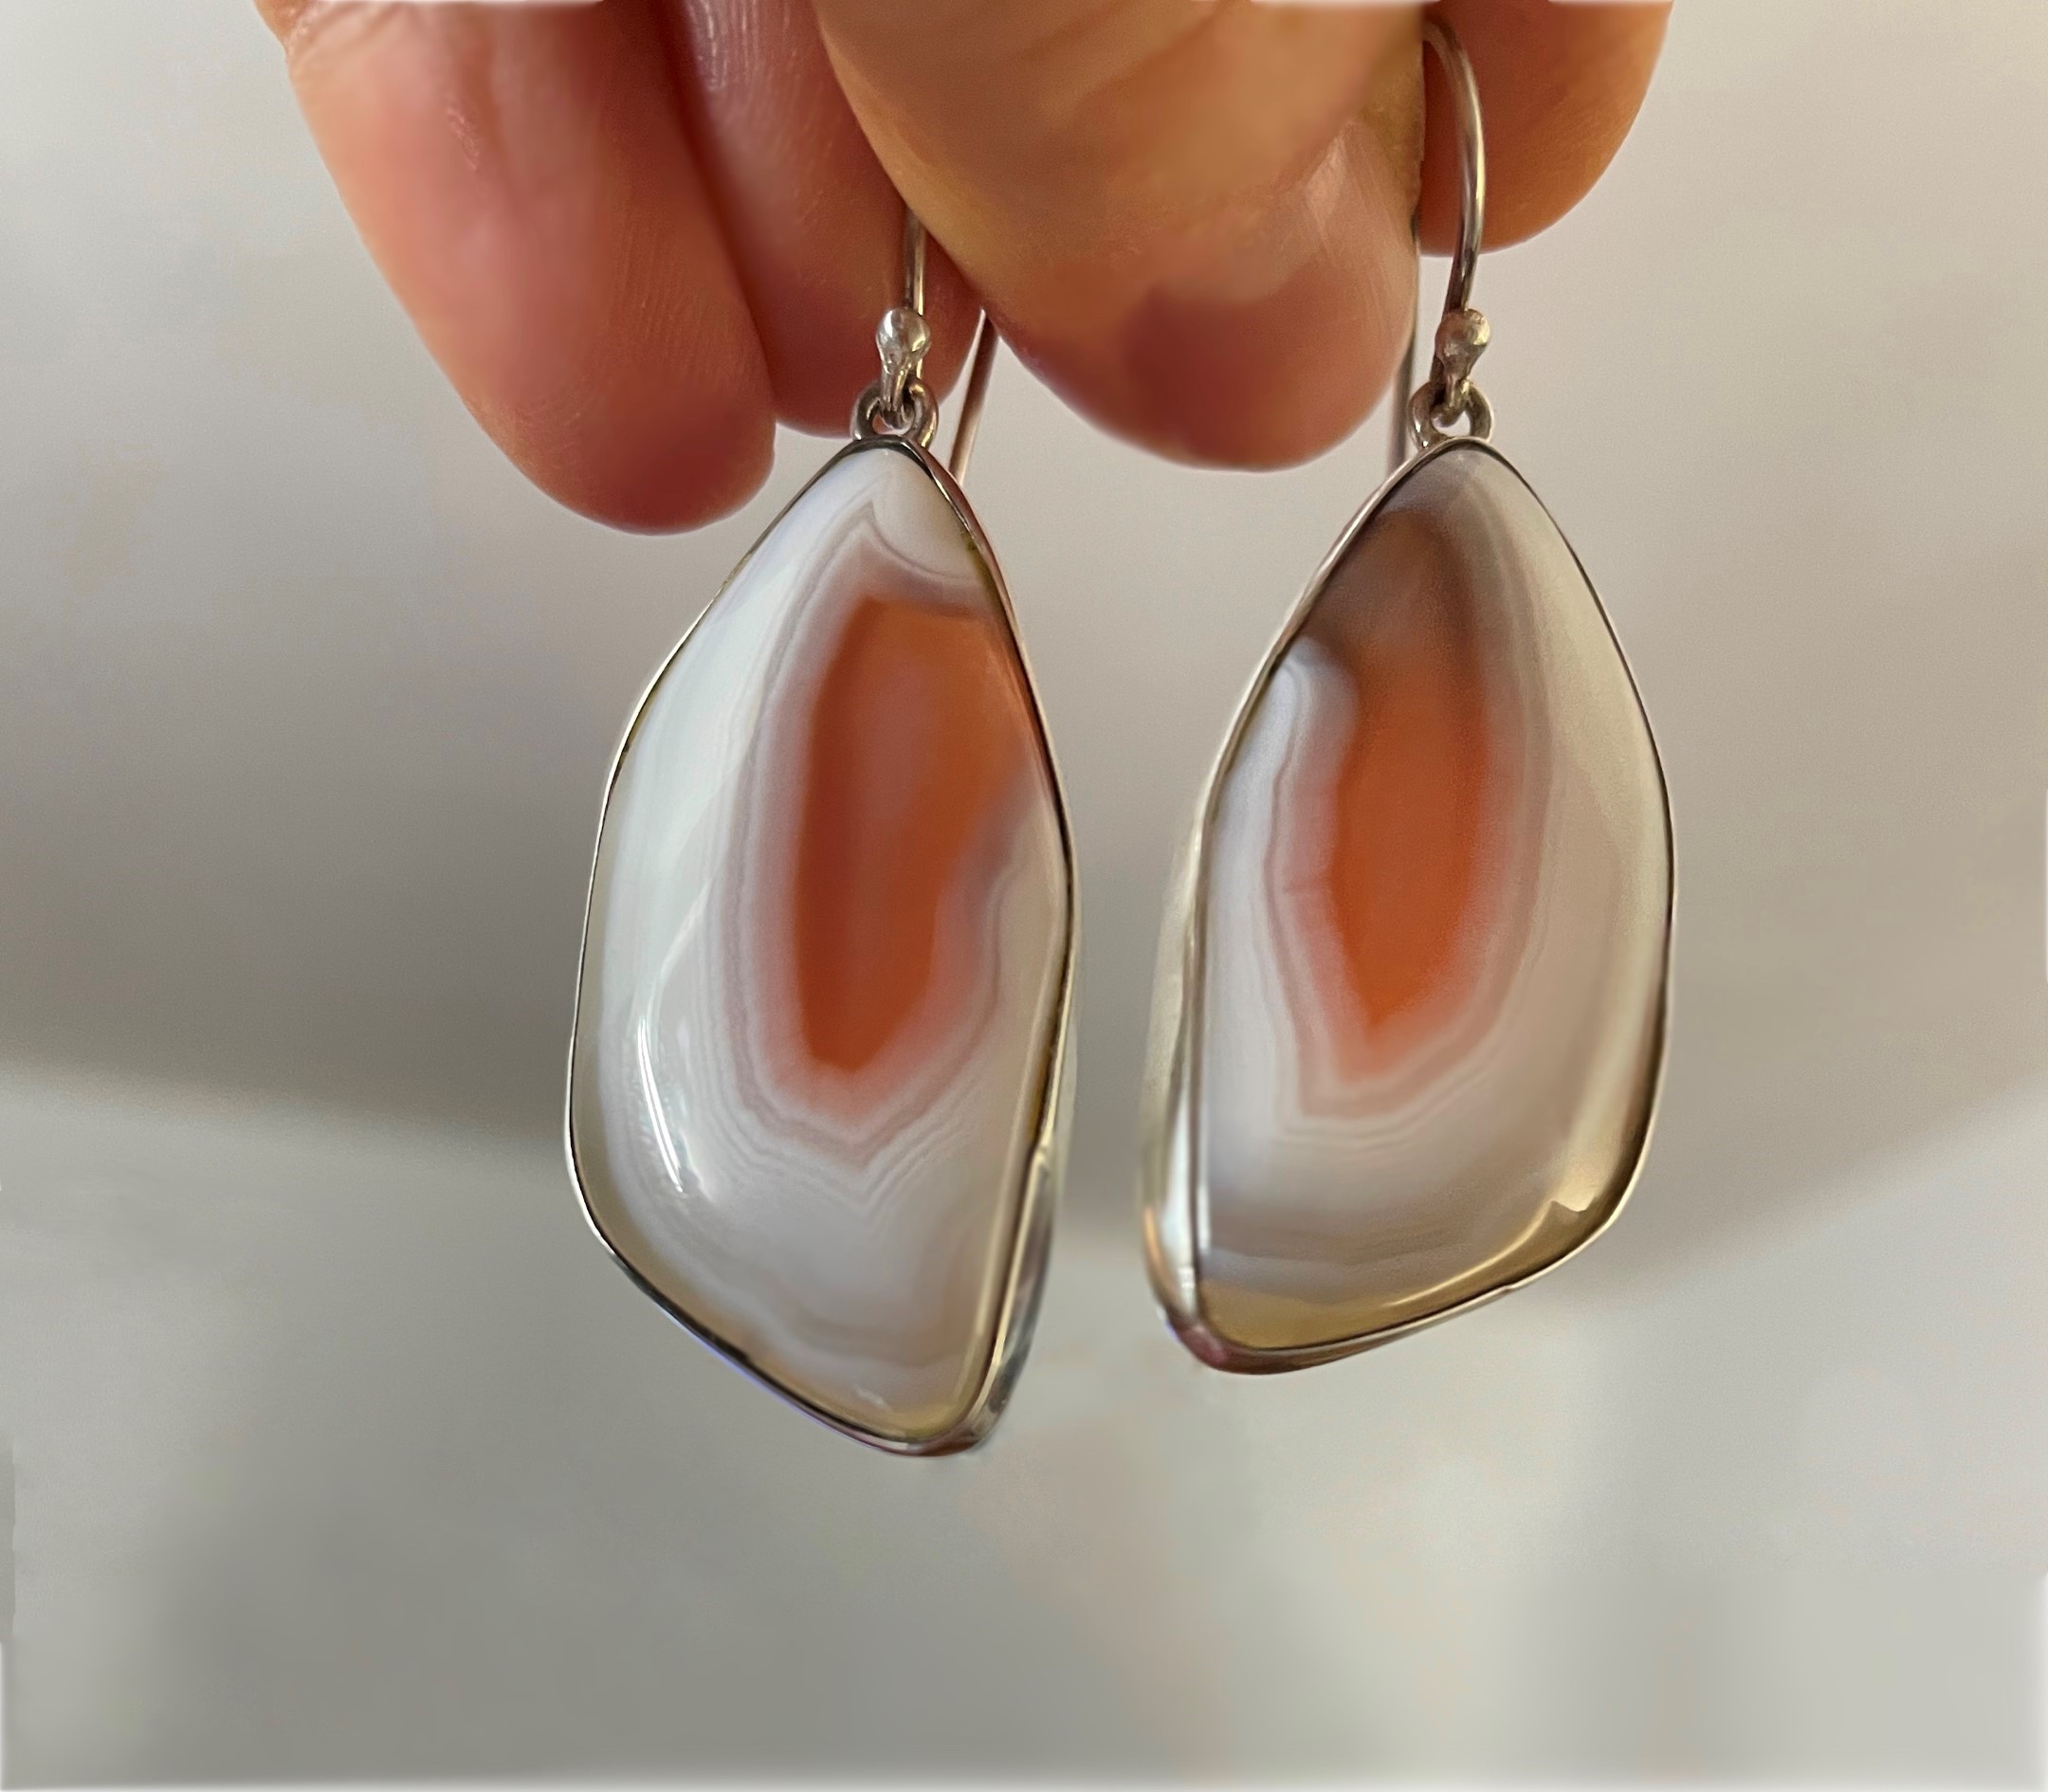 gemstone jewelry Botswana agate earrings sterling silver earrings dangle earrings gemstone earrings gift for her healing jewellery